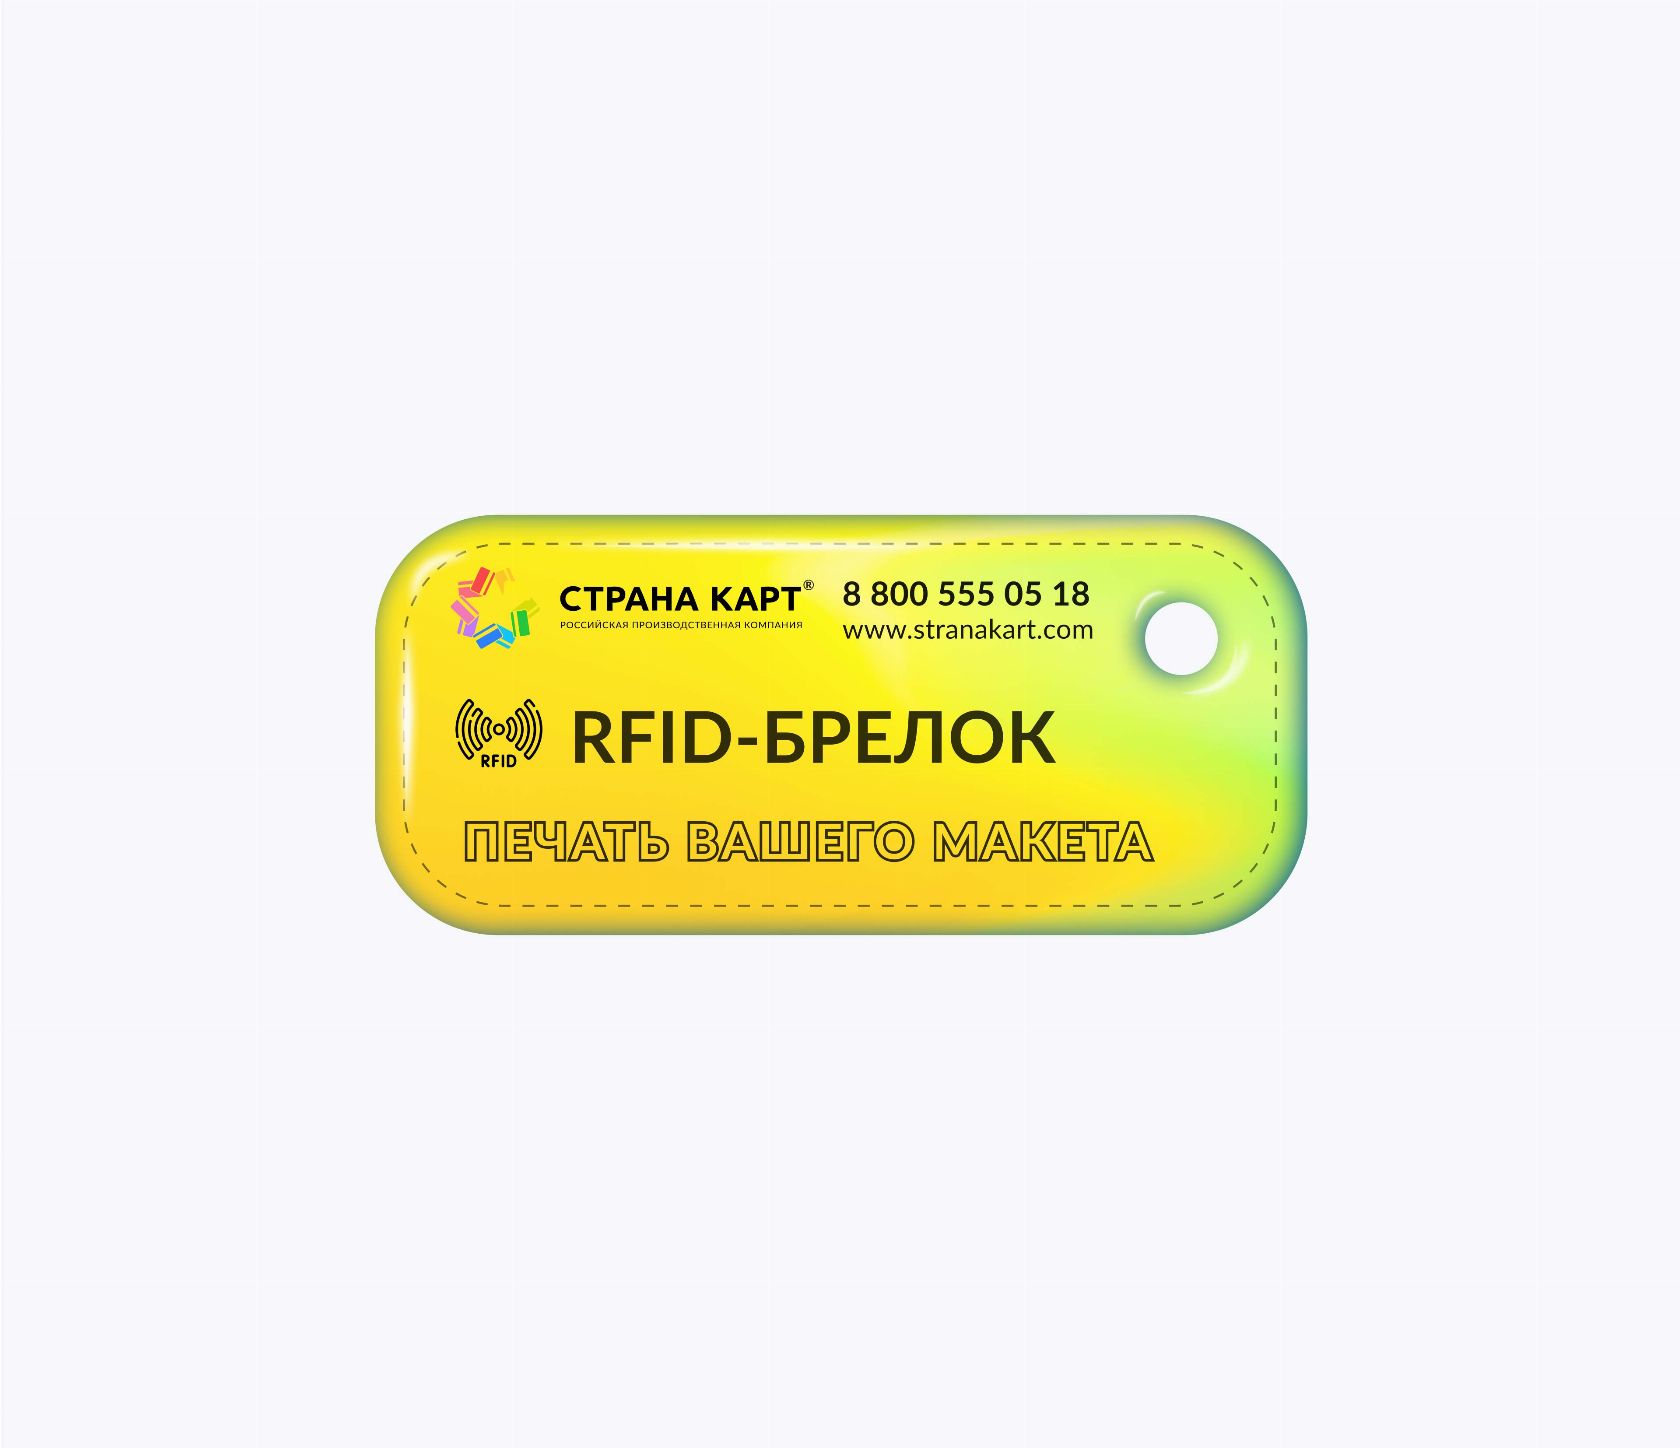 Прямоугольные мини RFID-брелоки NEOKEY® с чипом NXP ICODE SLIX 2 RFID-брелоки NEOKEY® с чипом NXP ICODE SLIX 2